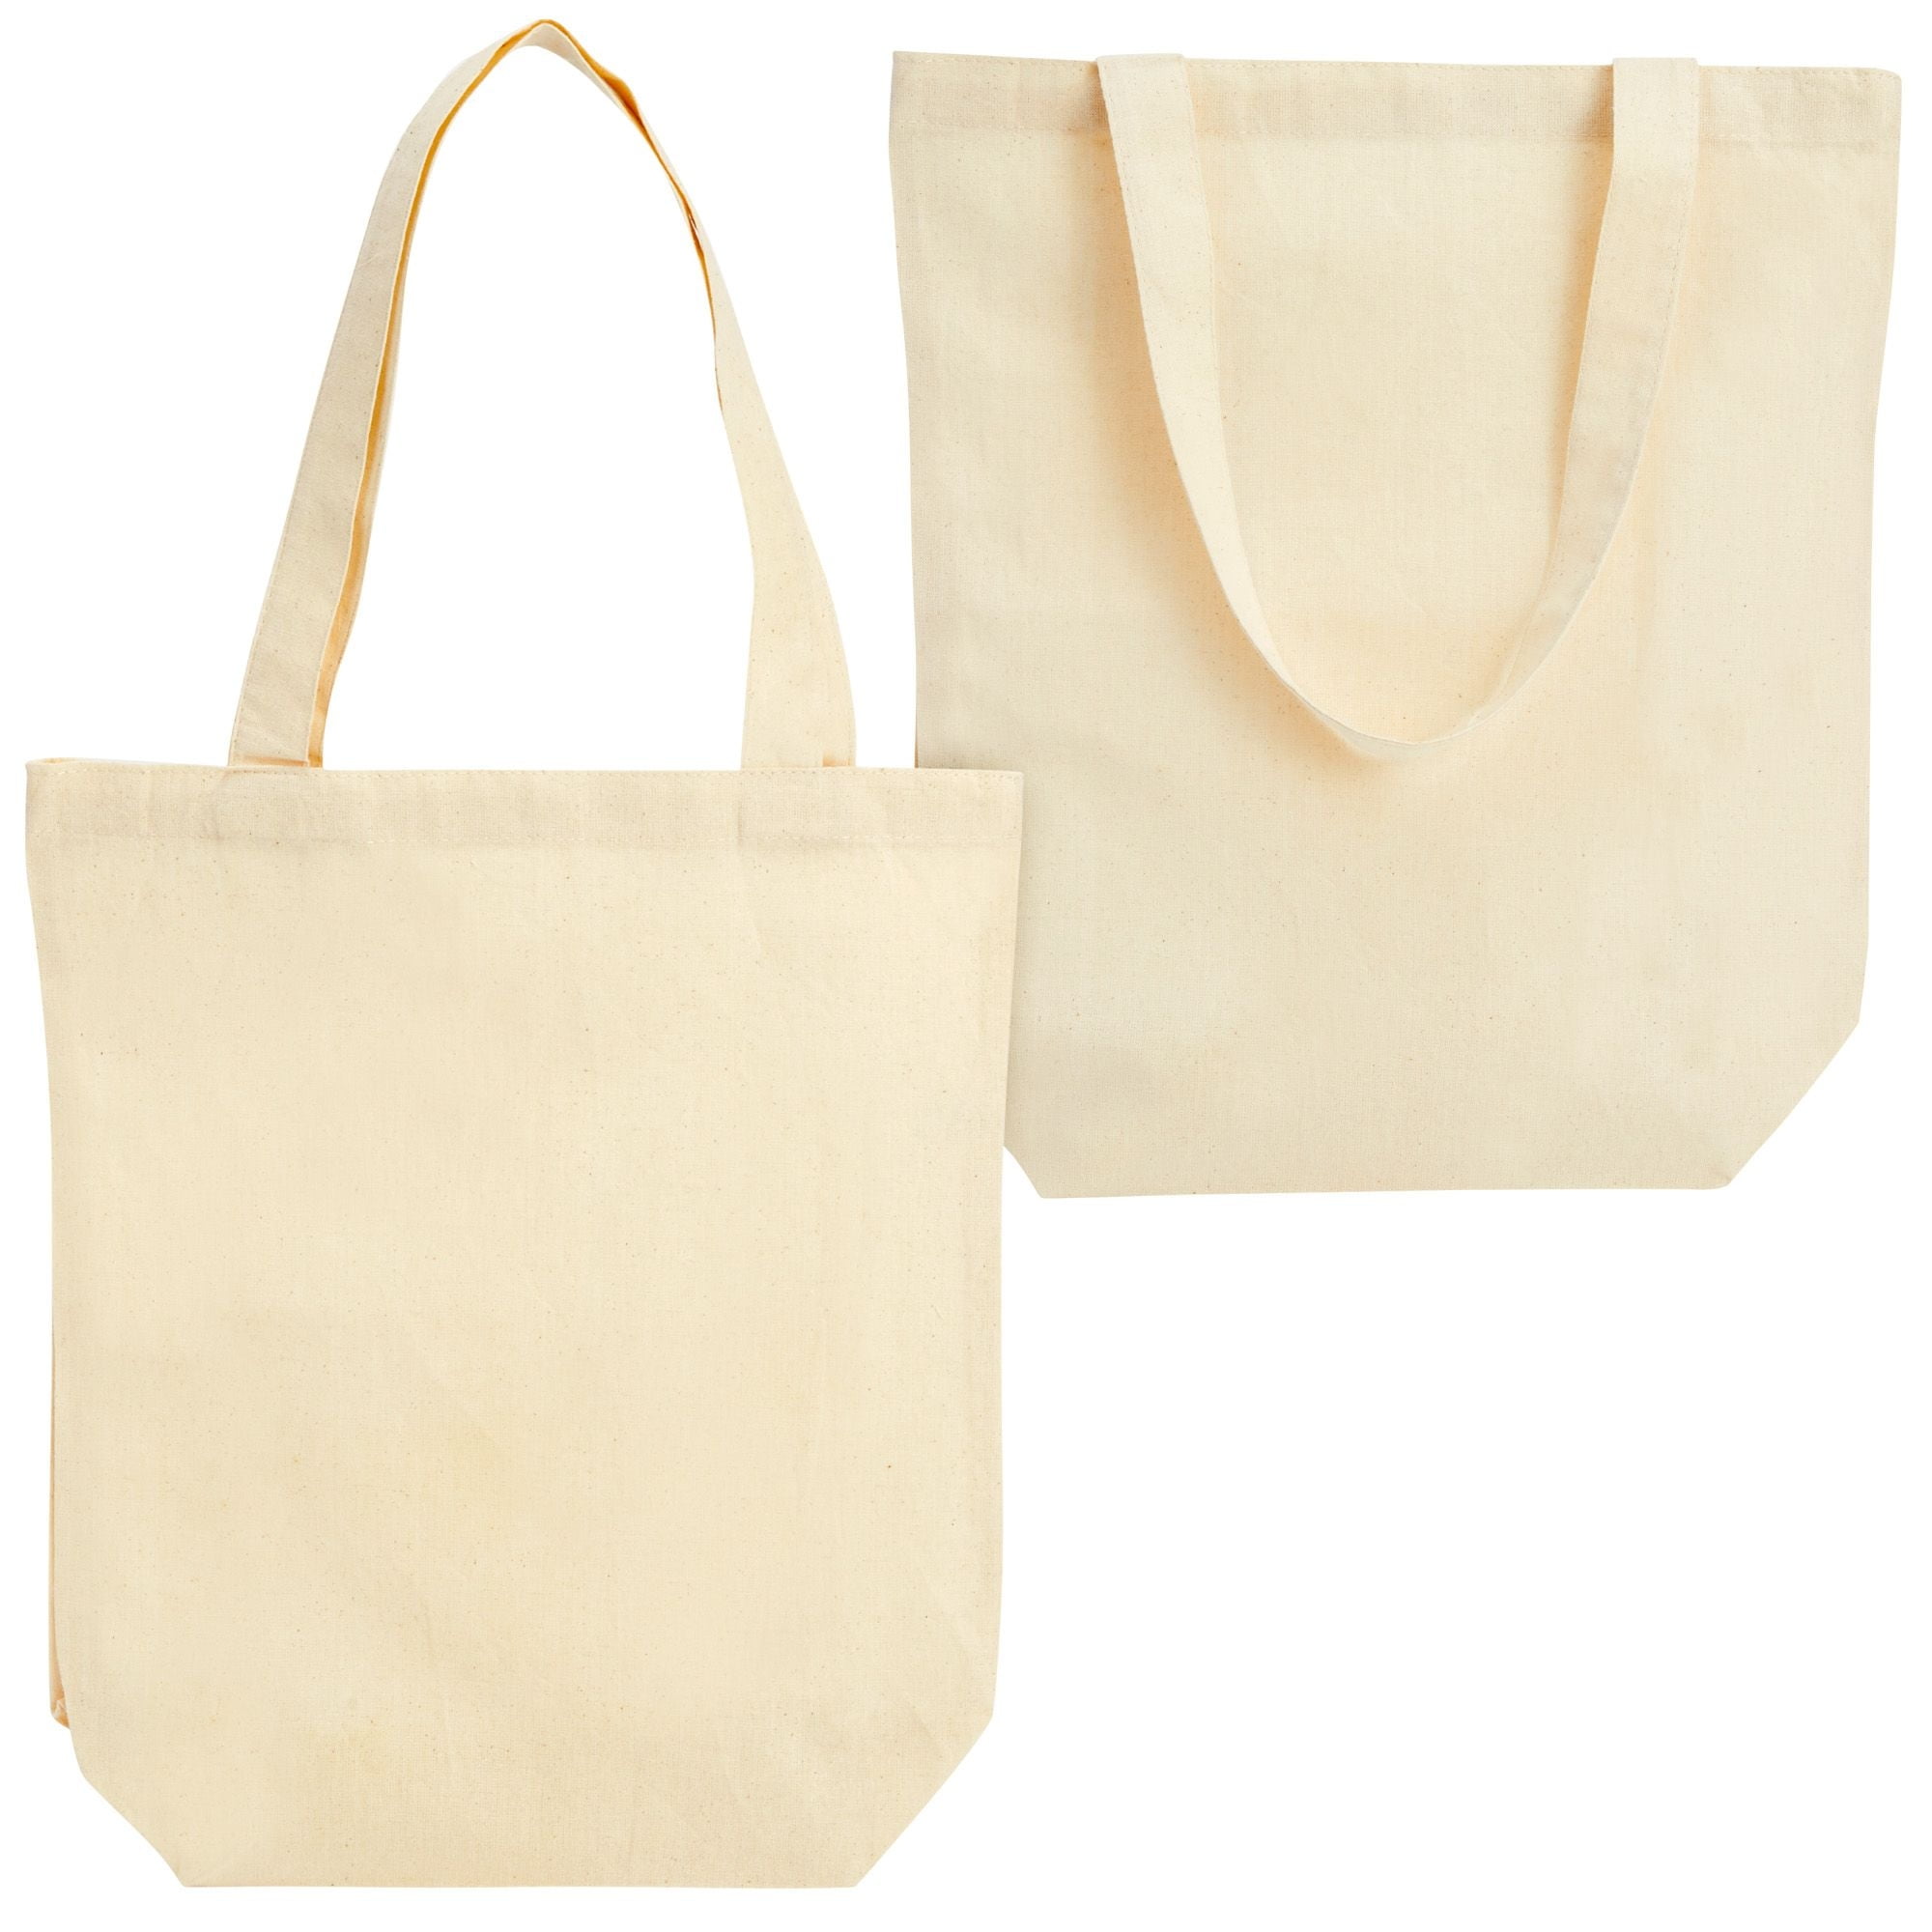 Tote Bag Materials - Enviro-Tote | Custom Canvas Tote Bags - Made in USA